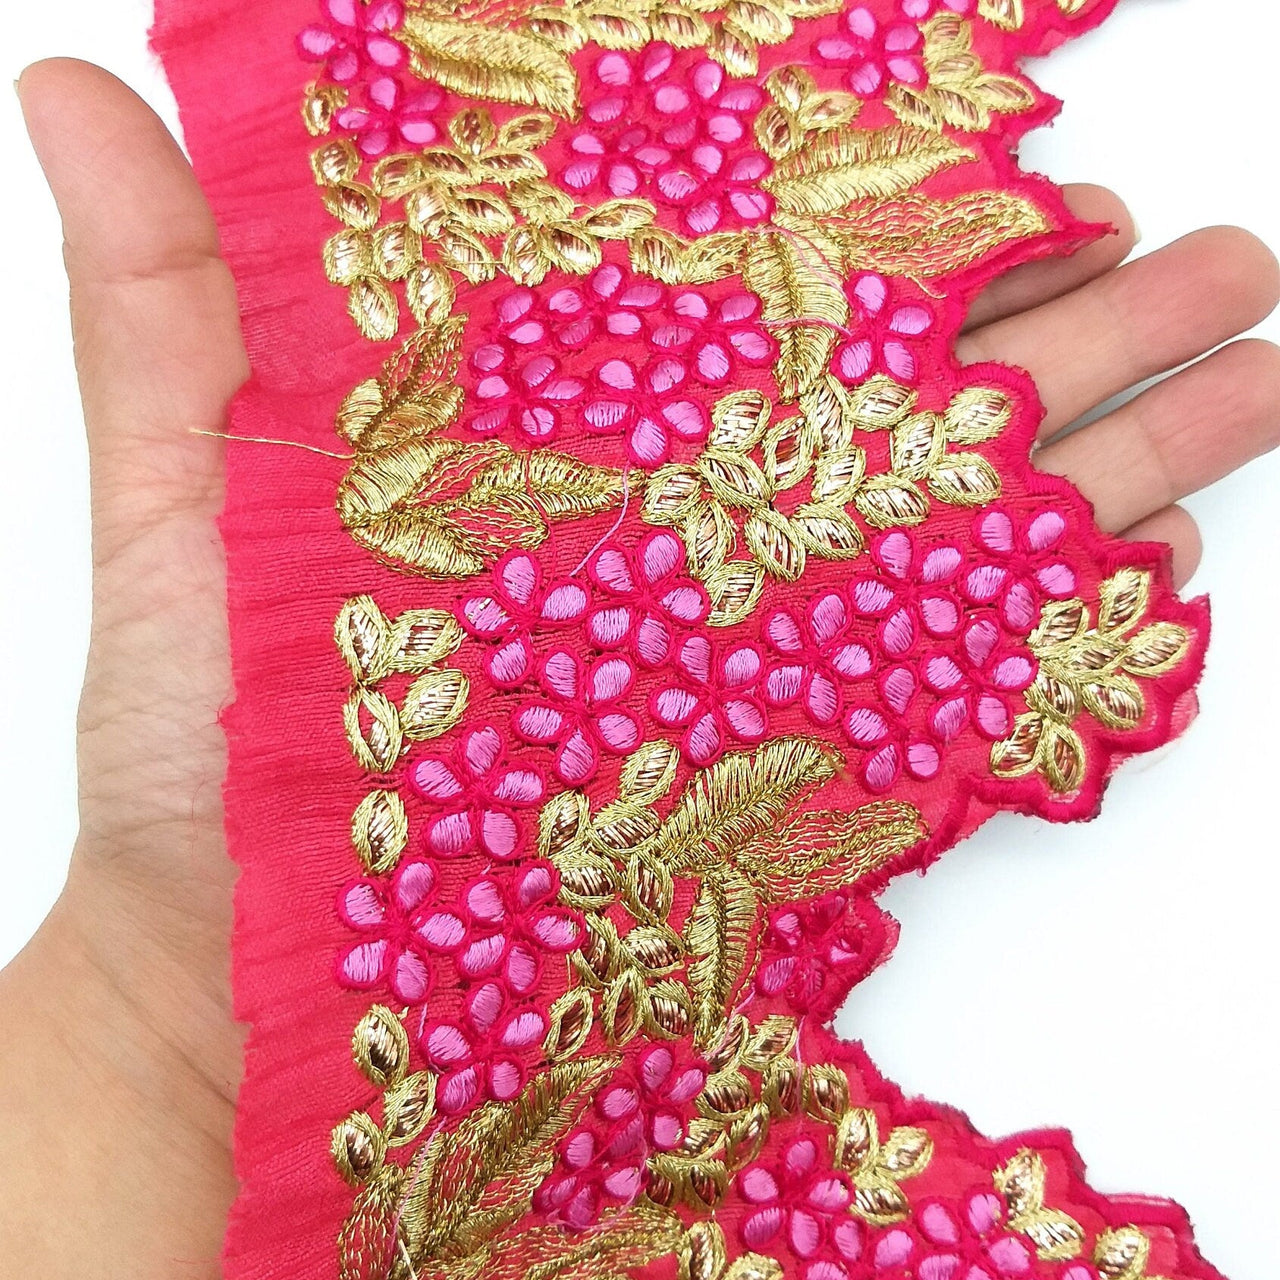 Fuchsia Pink Silk Fabric Trim, Pink & Gold Floral Embroidery Indian Sari Border Trim By Yard Decorative Trim Craft Lace